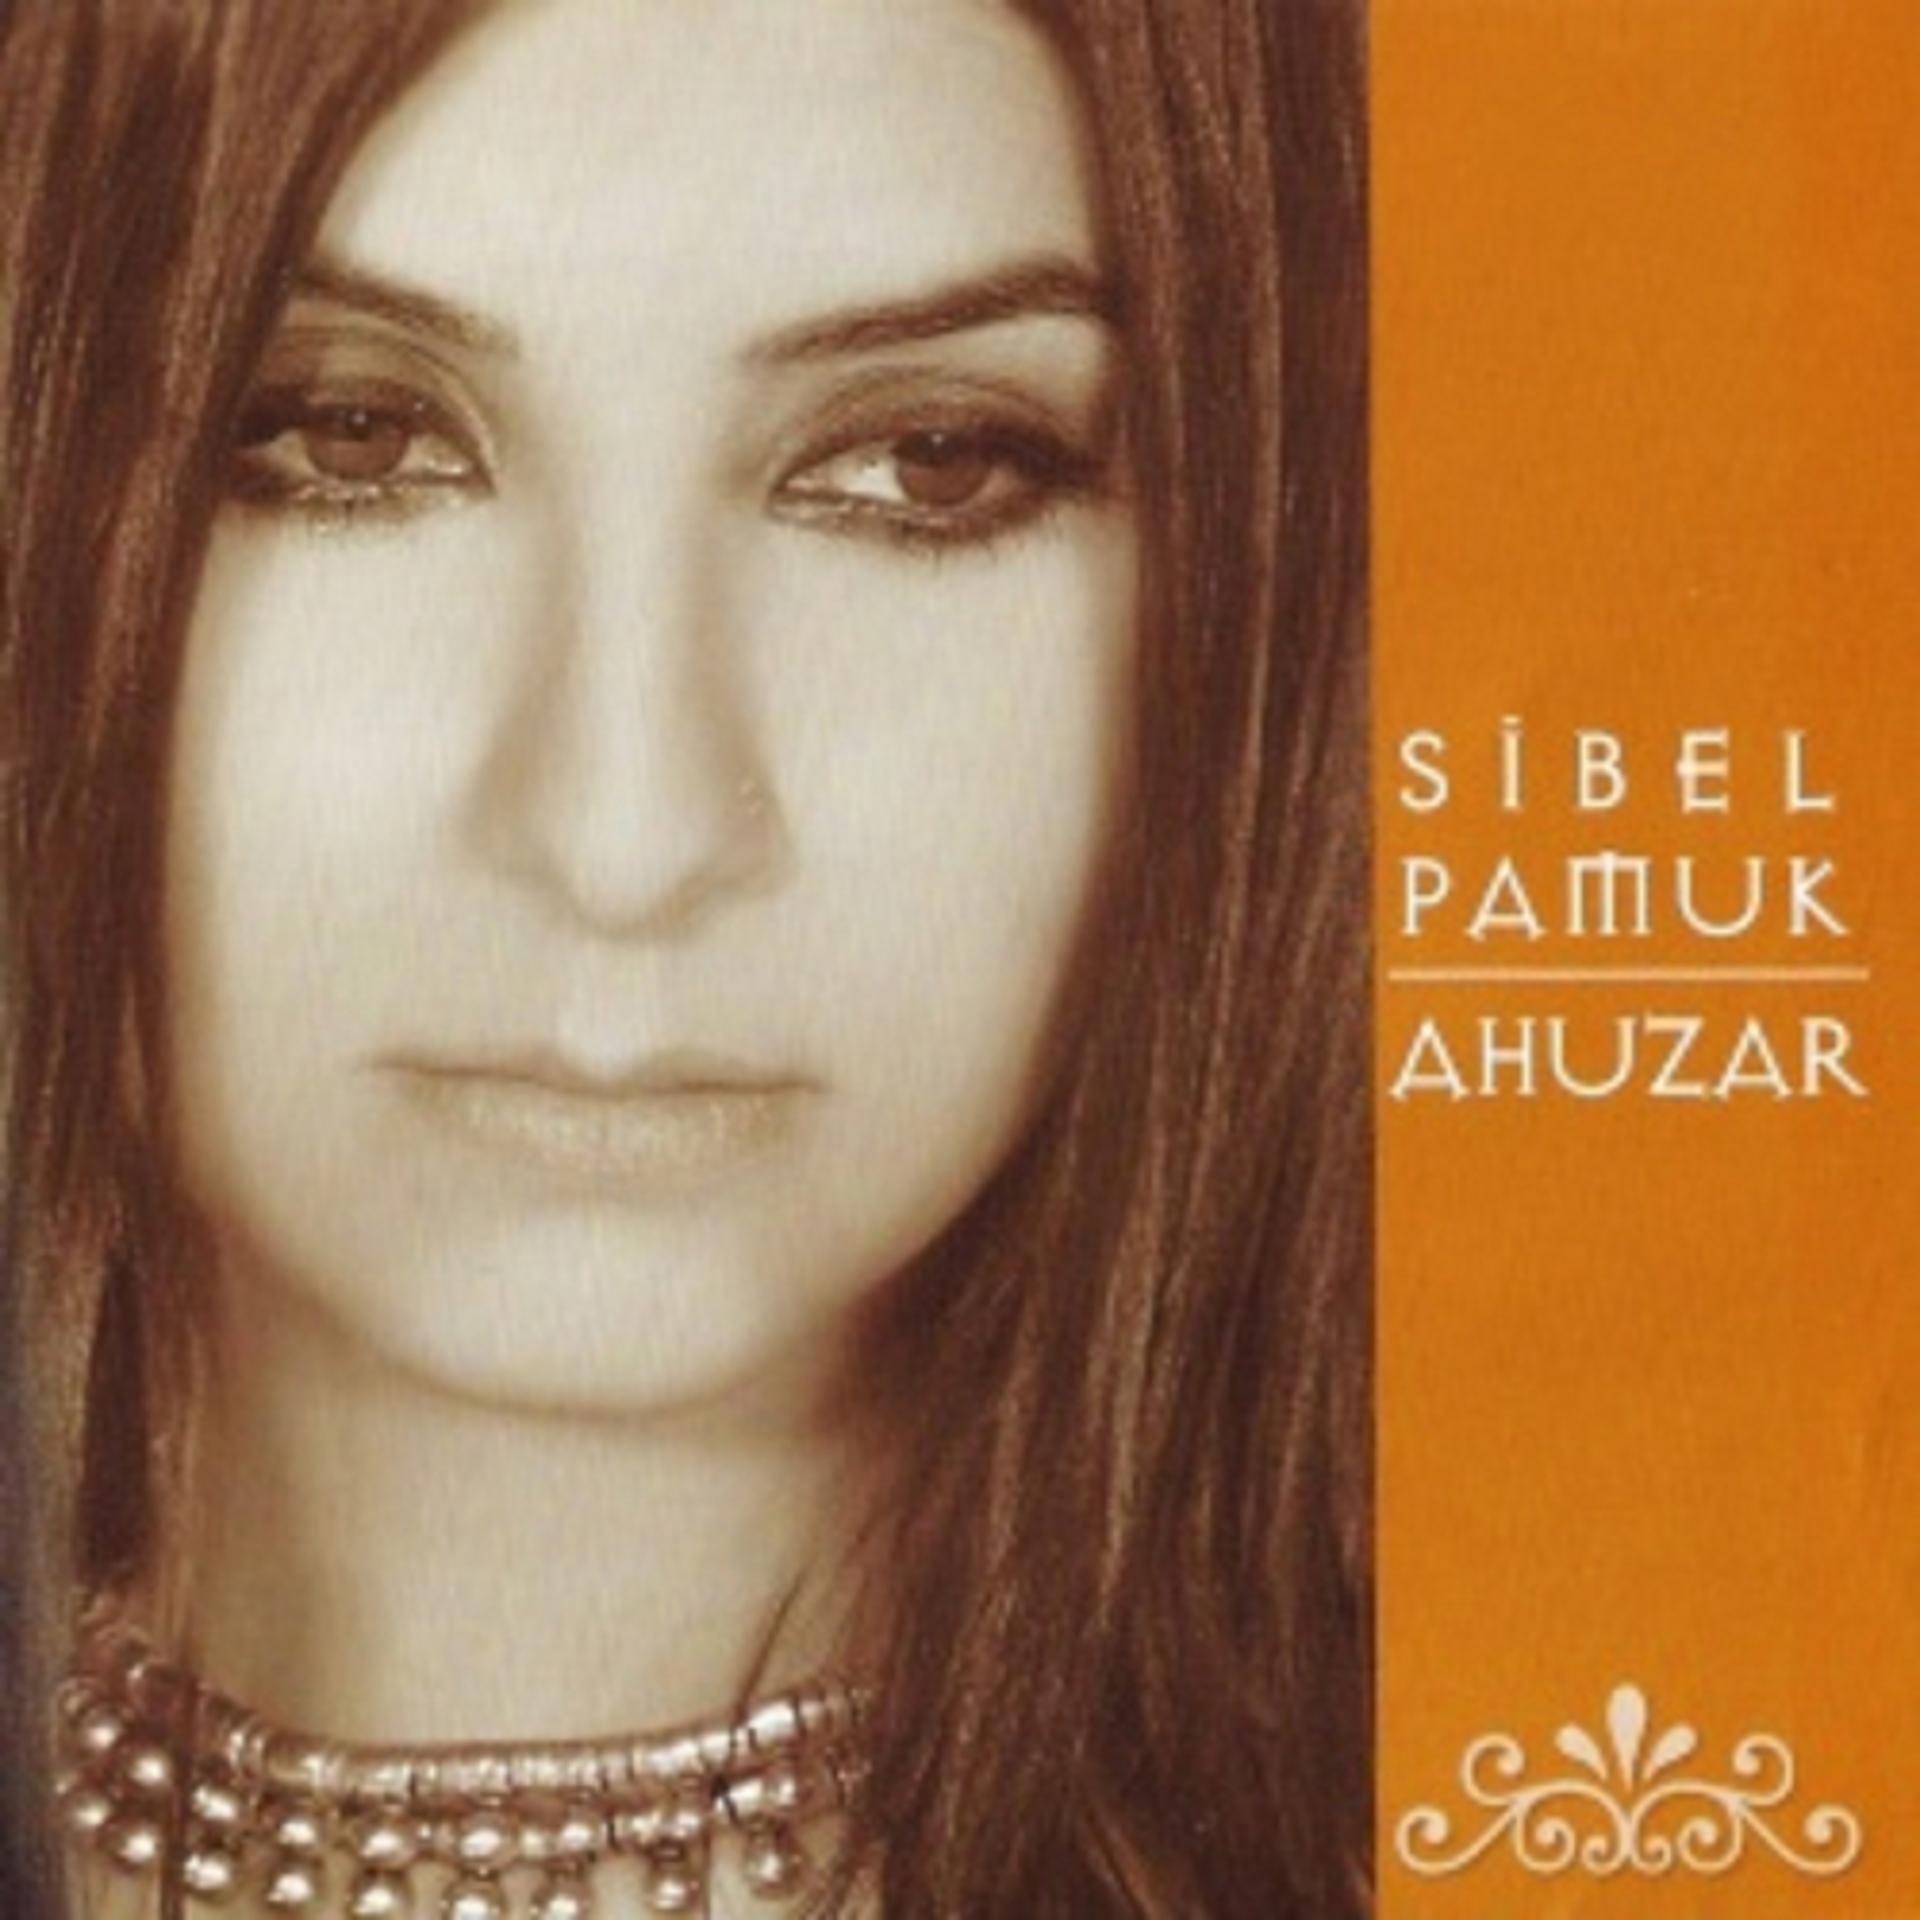 Постер к треку Sibel Pamuk - Varım Yoktur